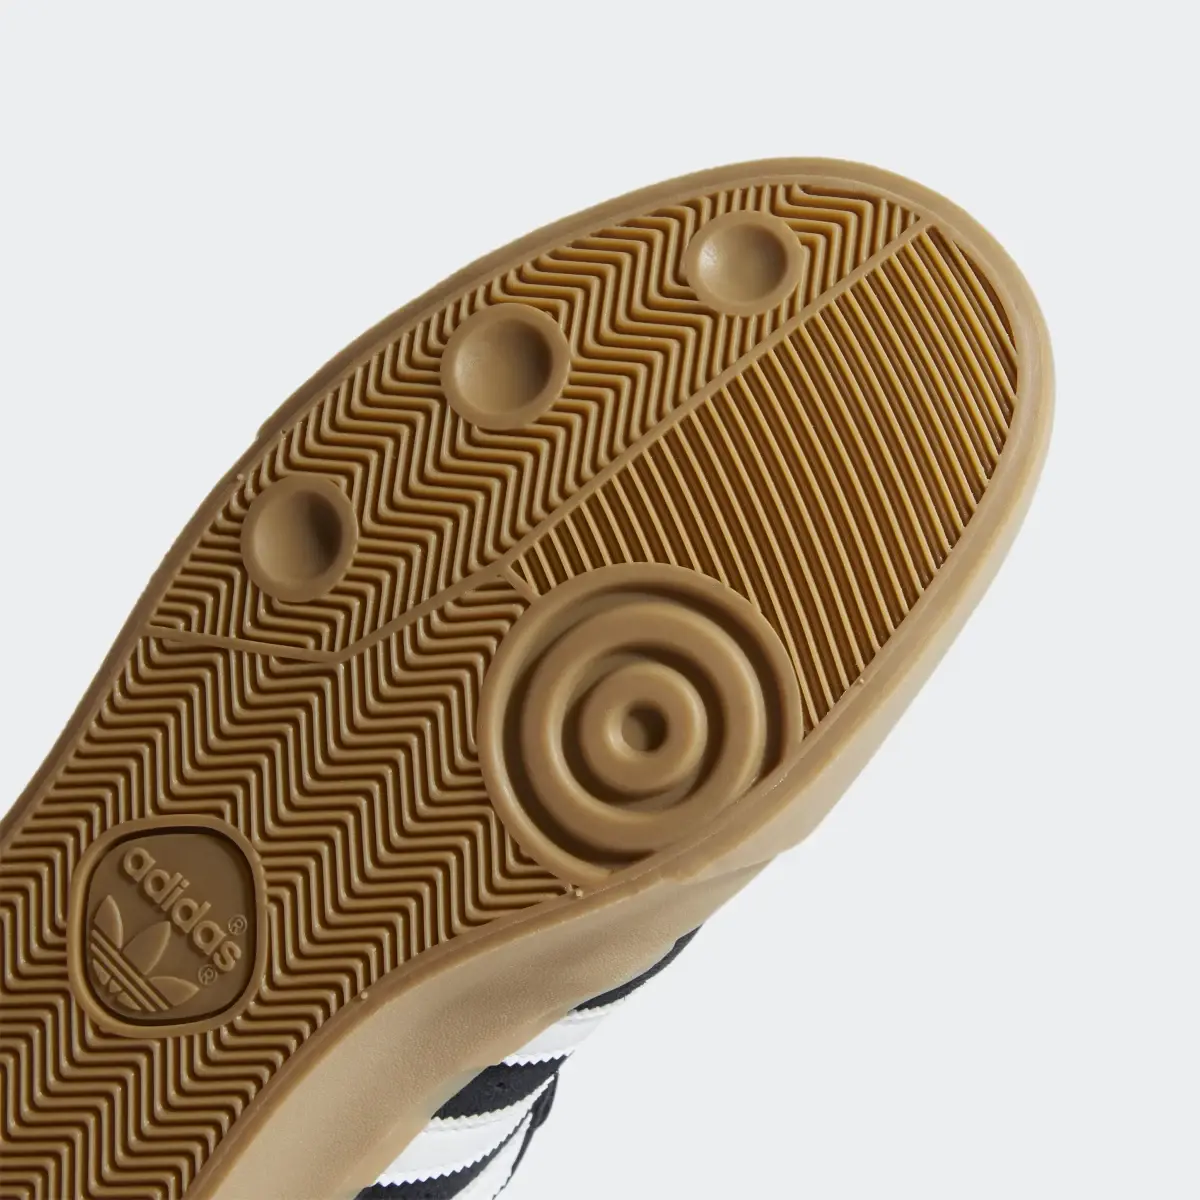 Adidas Seeley XT Shoes. 3